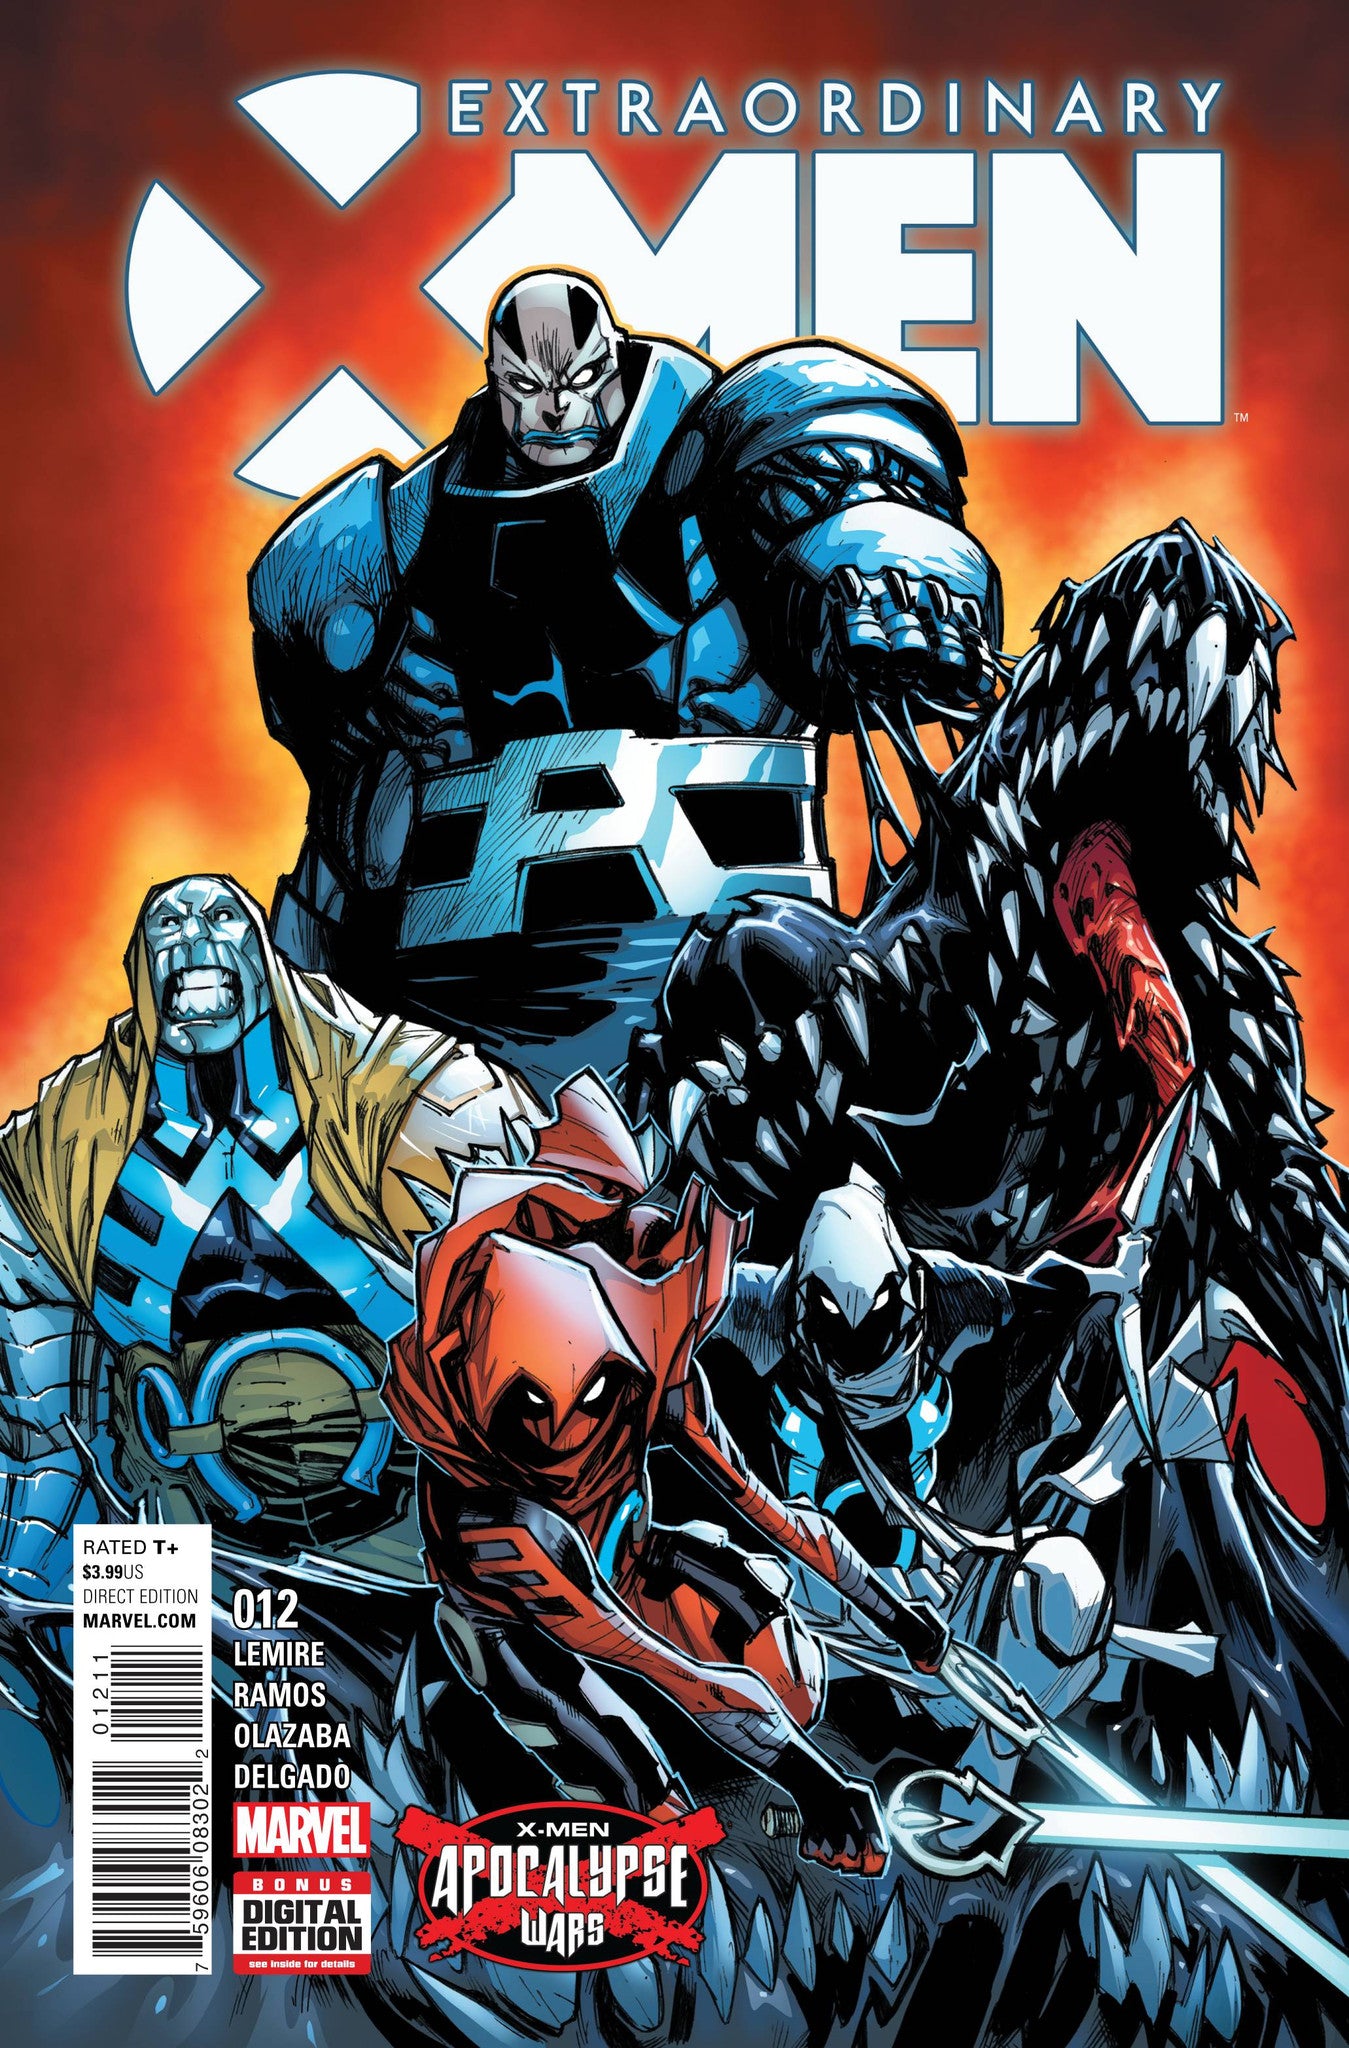 EXTRAORDINARY X-MEN #12 AW COVER